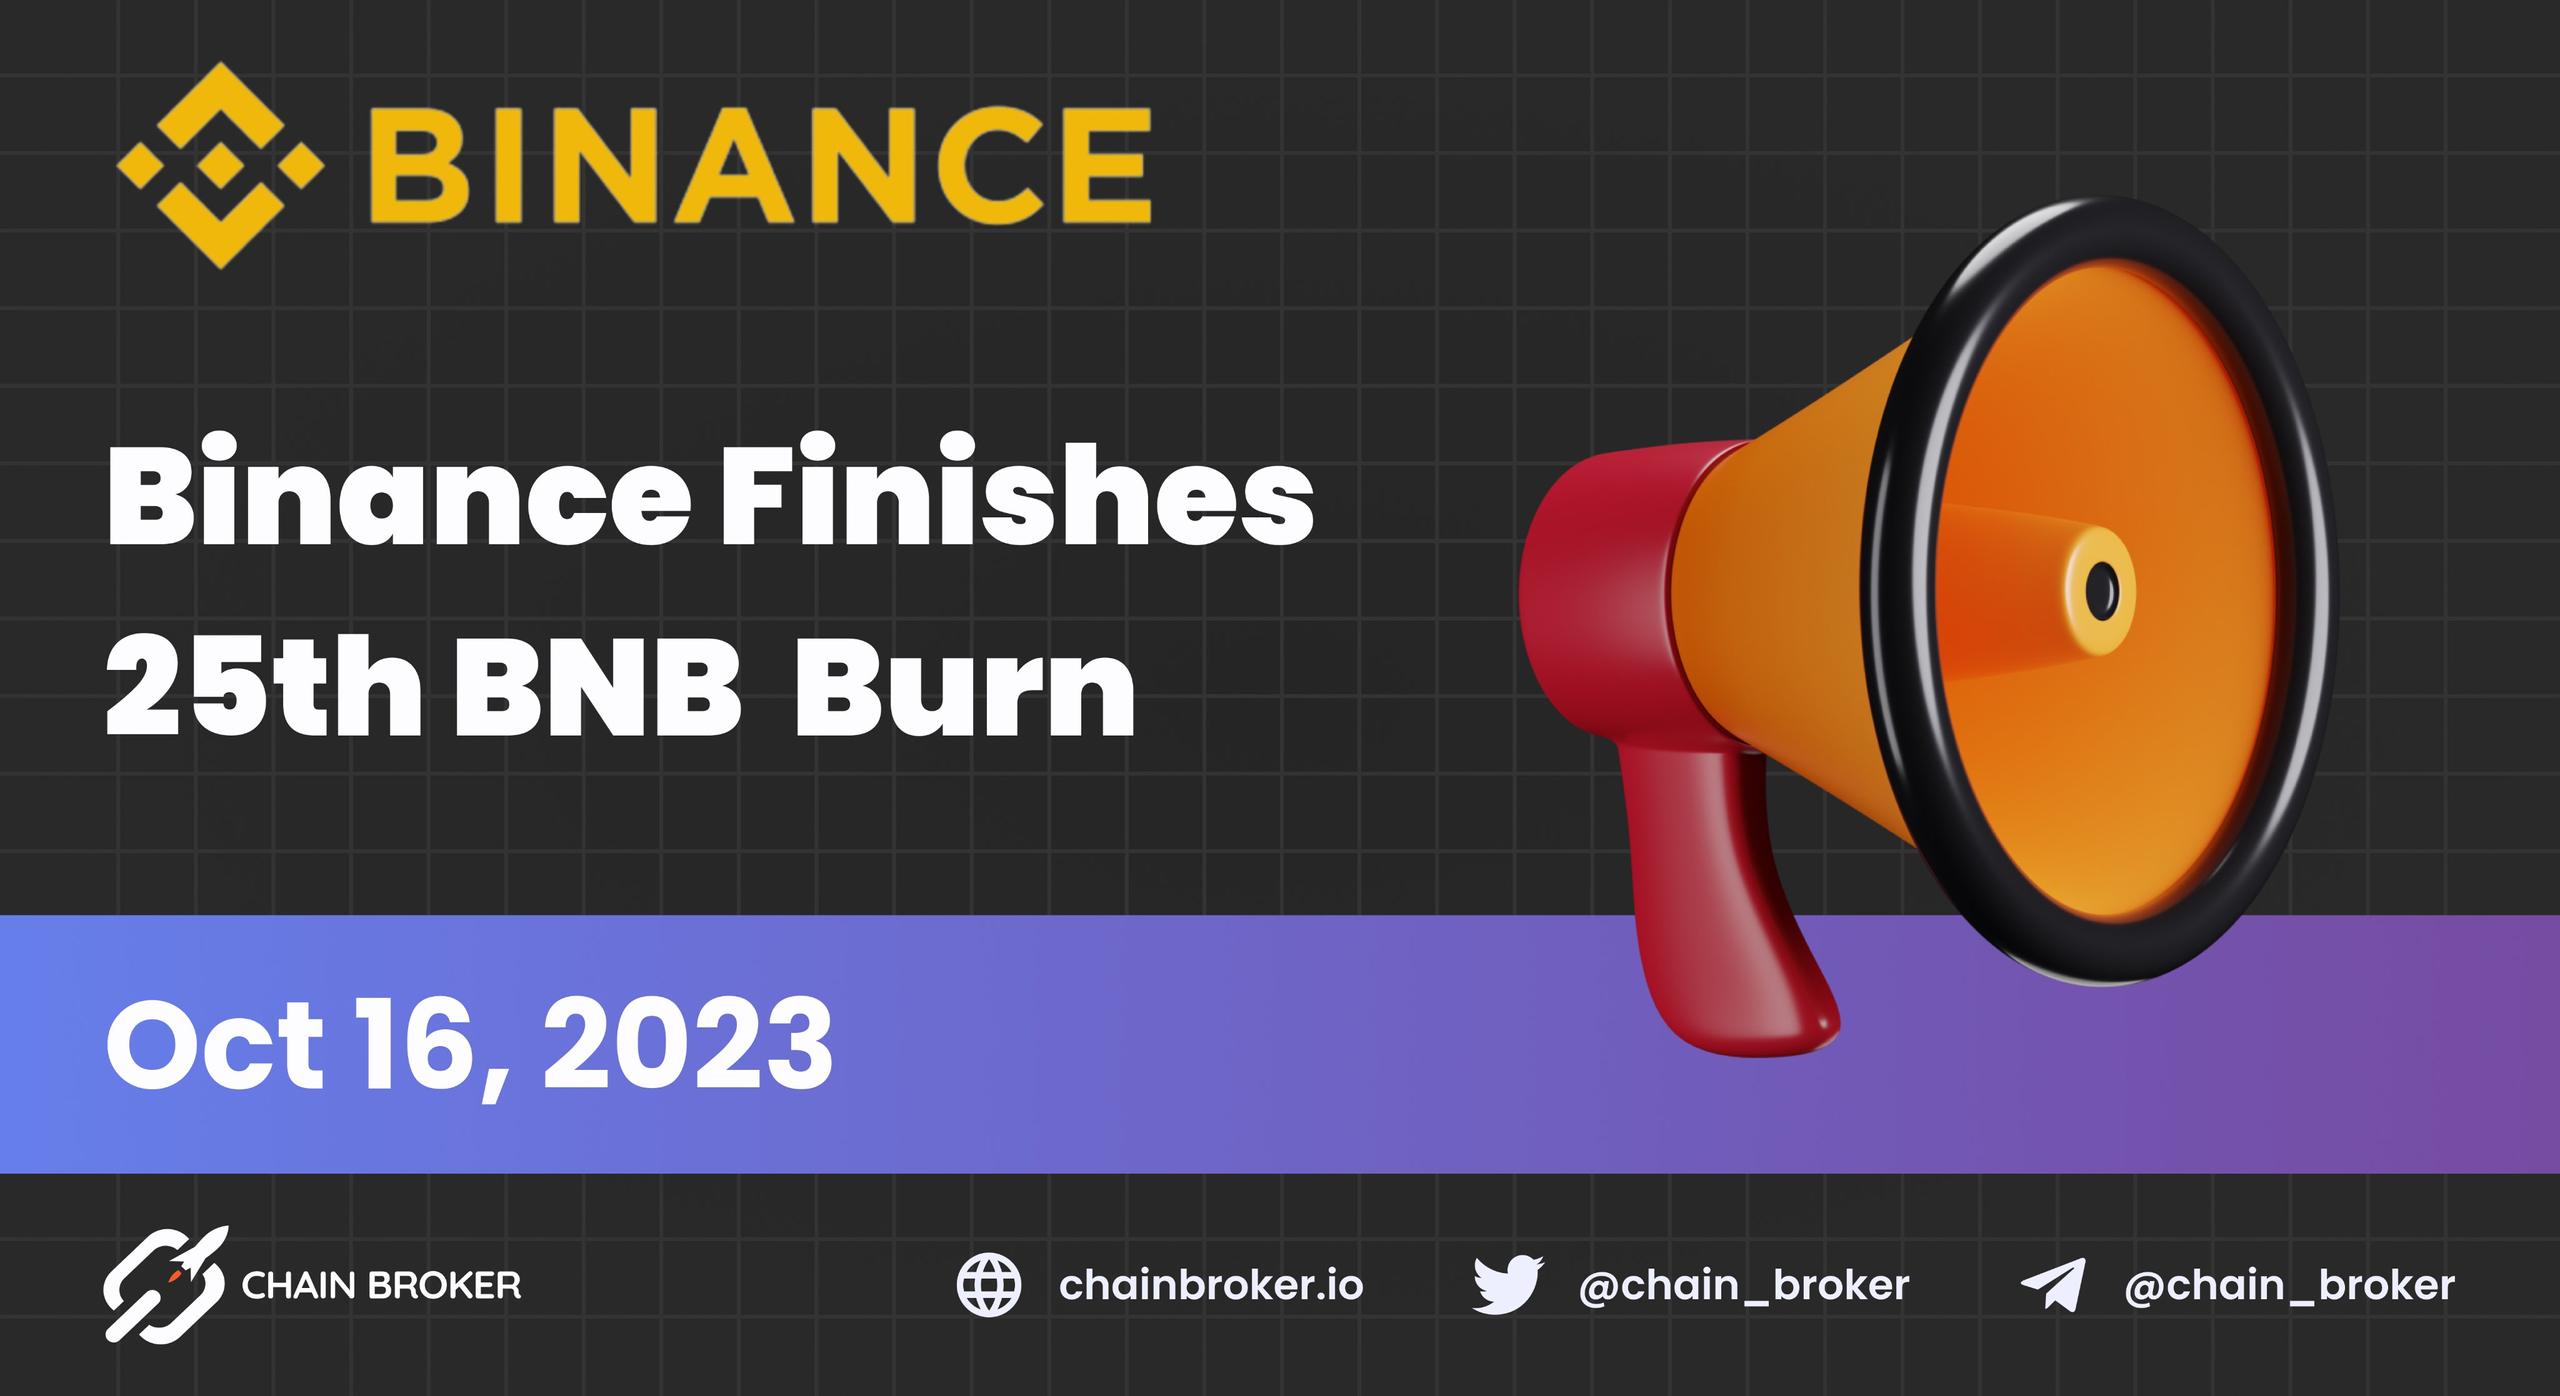 Binance finishes its regular BNB burn